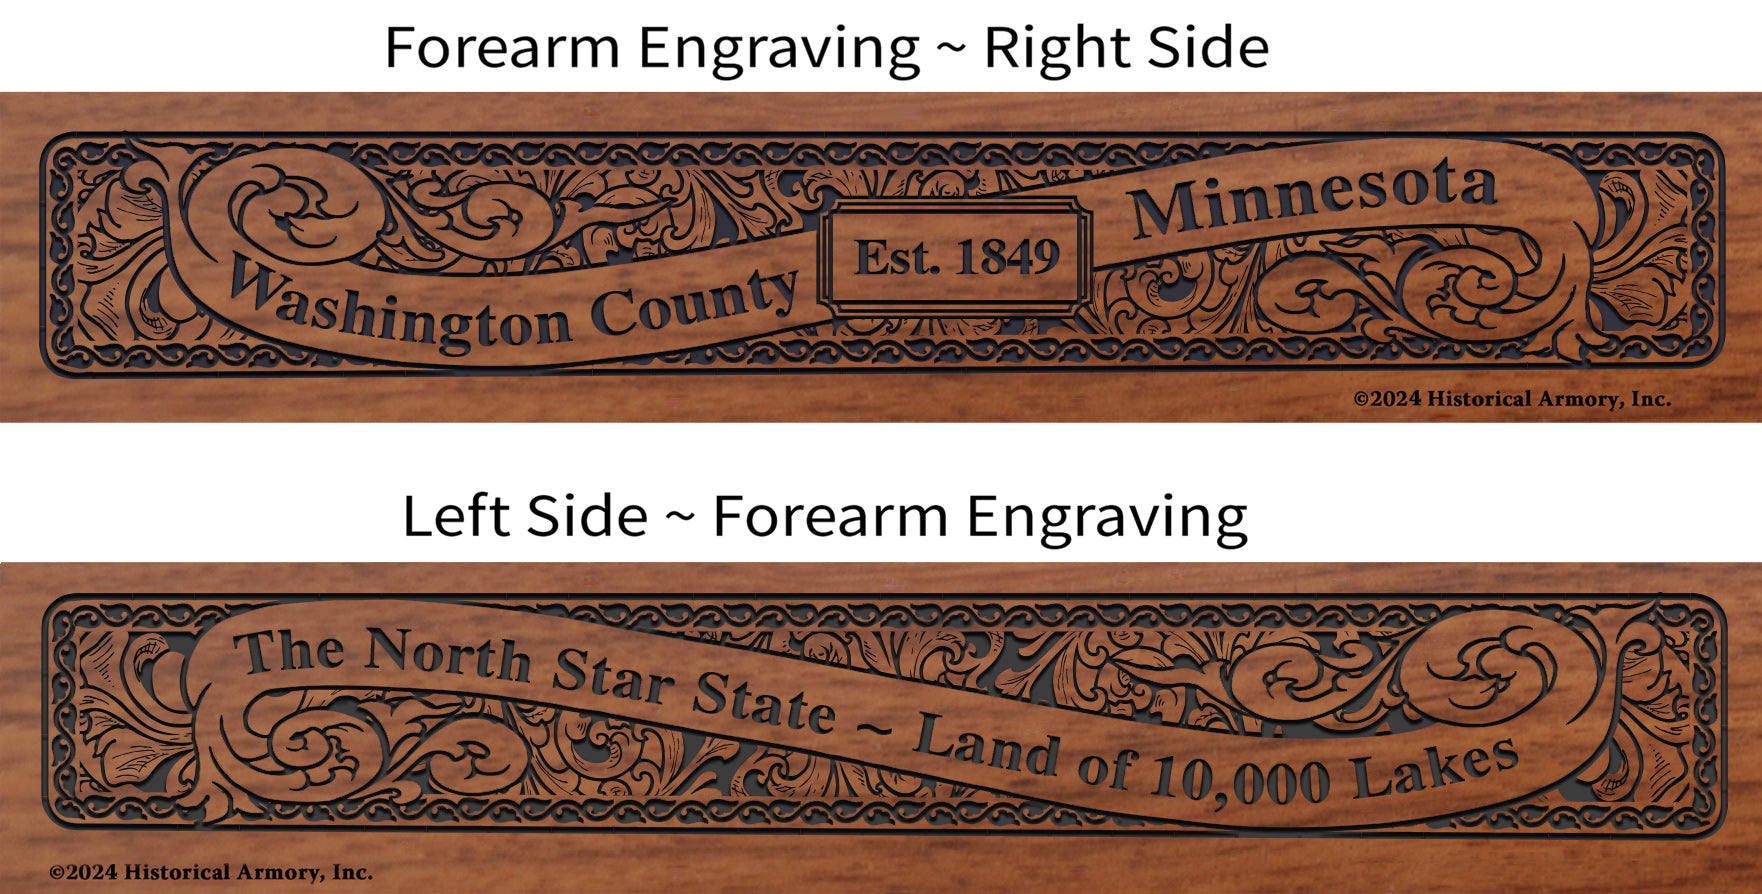 Washington County Minnesota Engraved Rifle Forearm